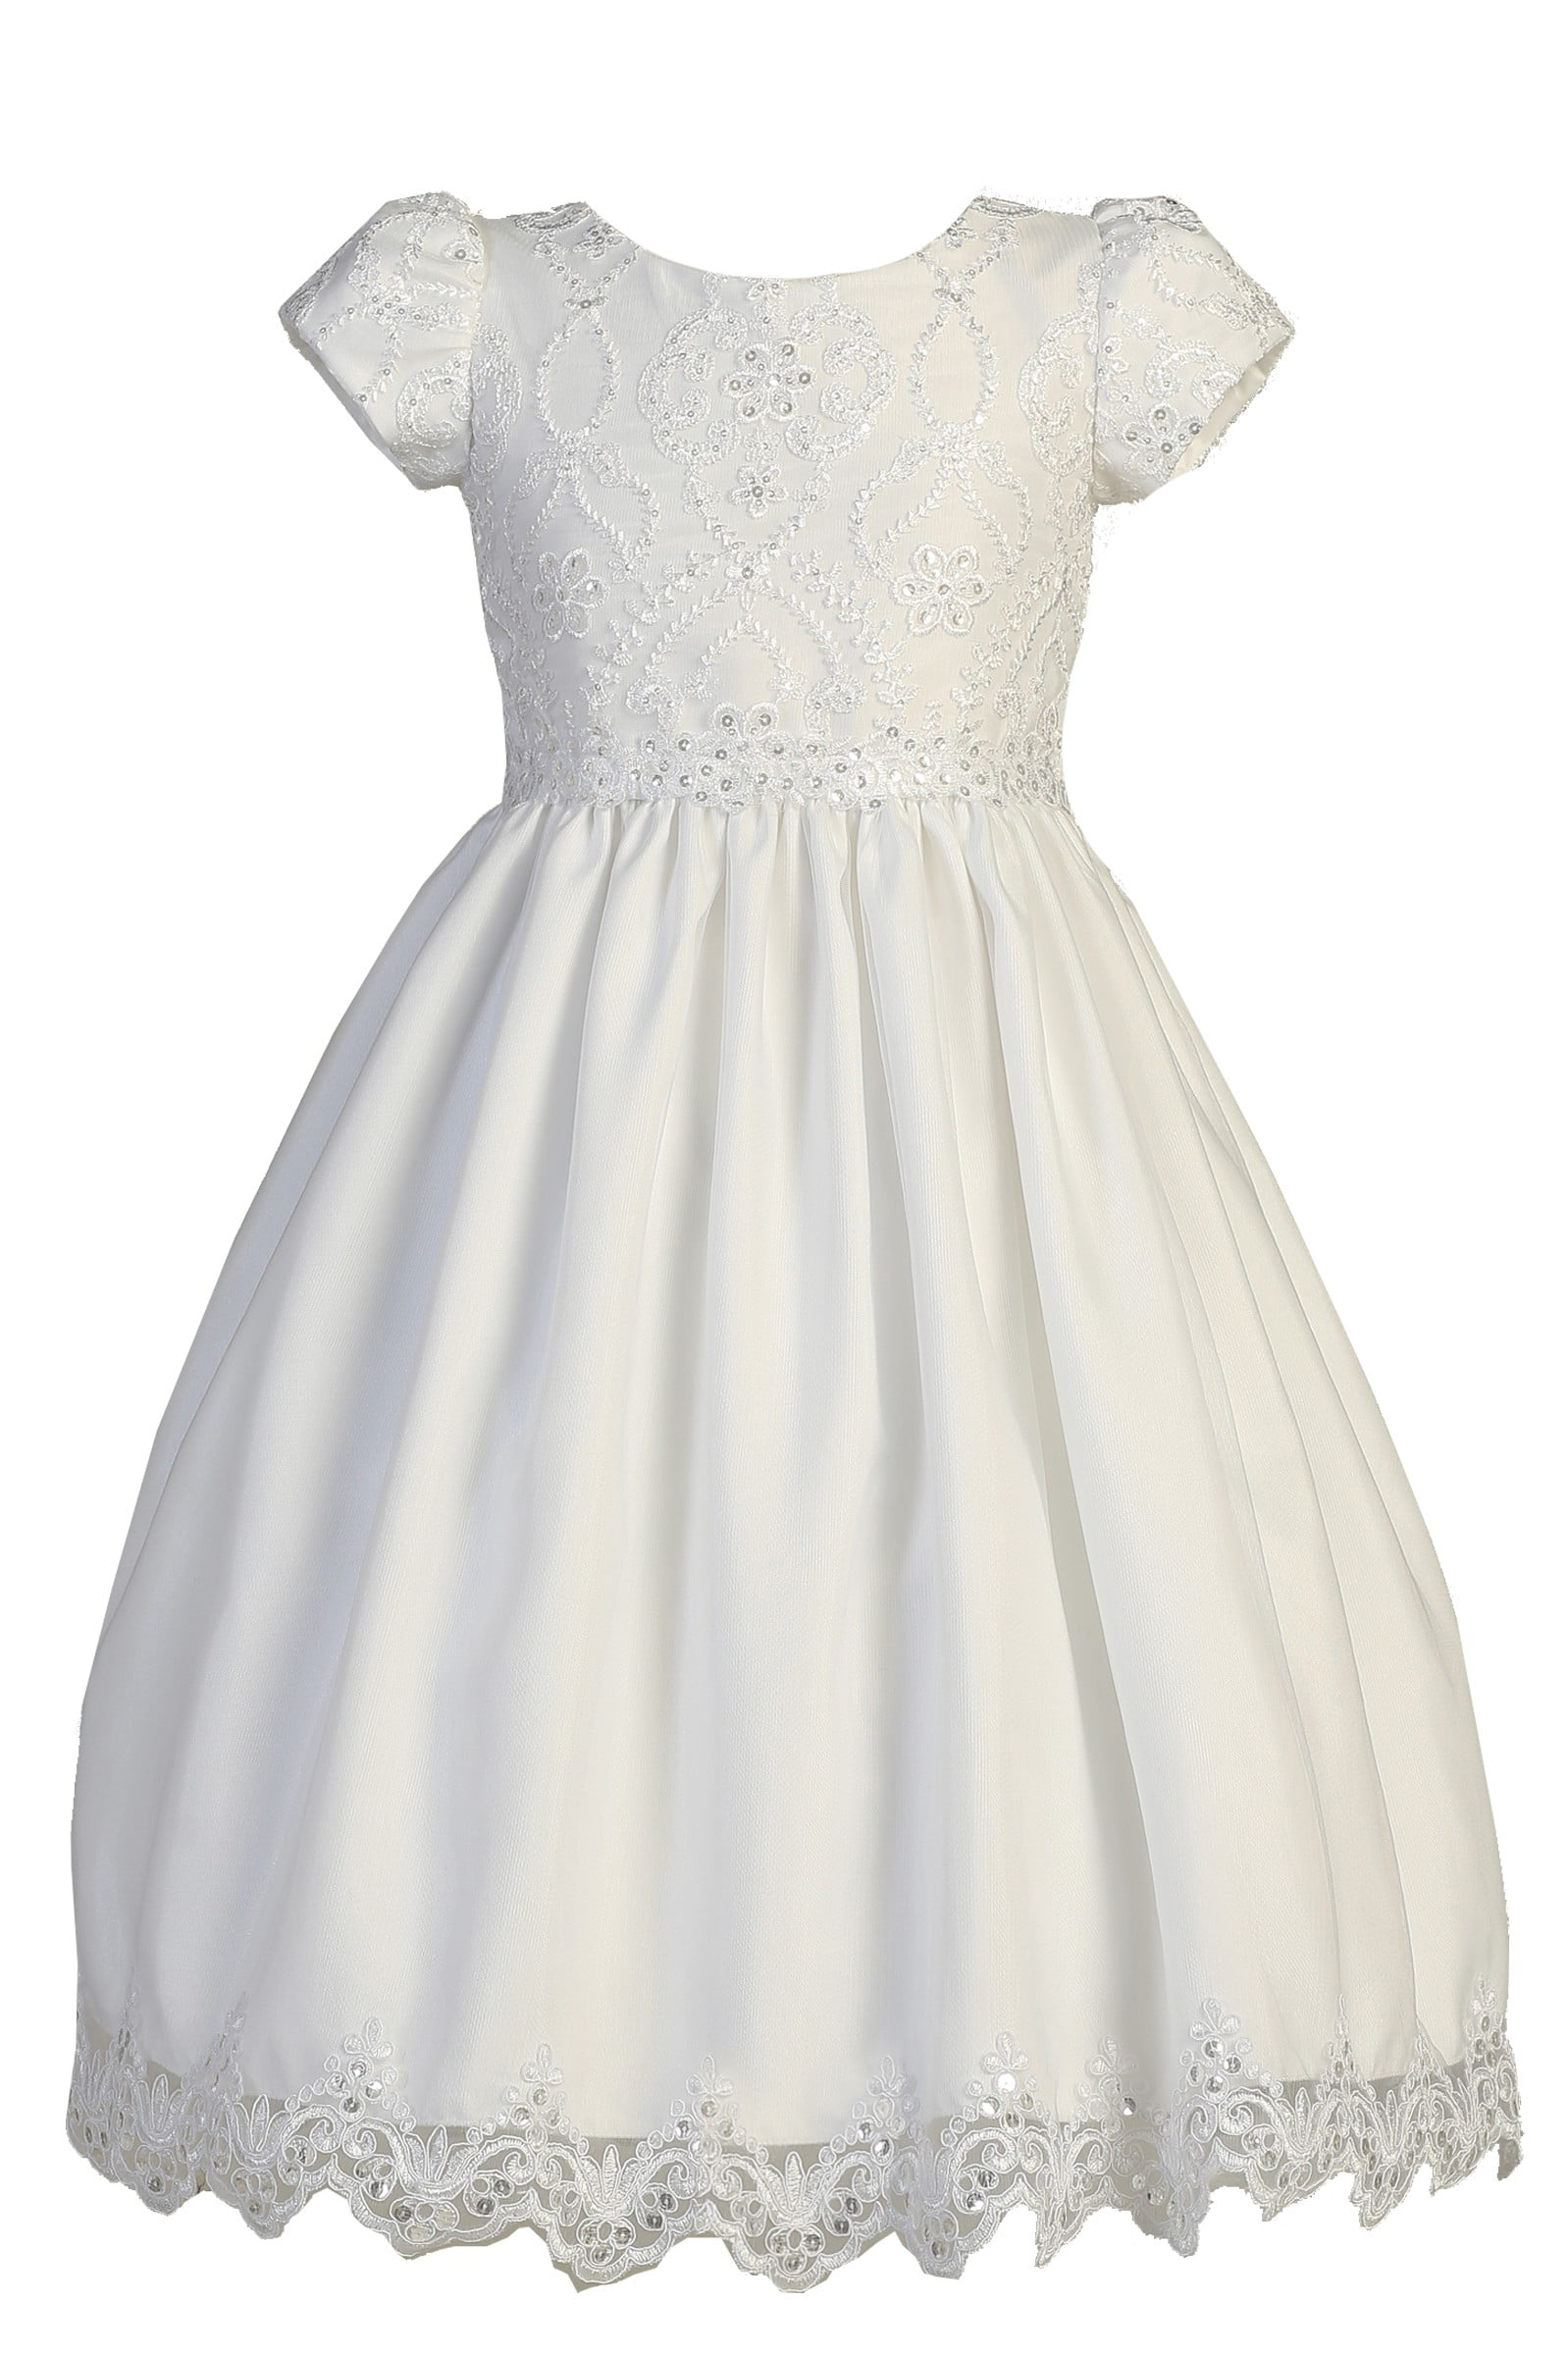 walmart plus size white dresses